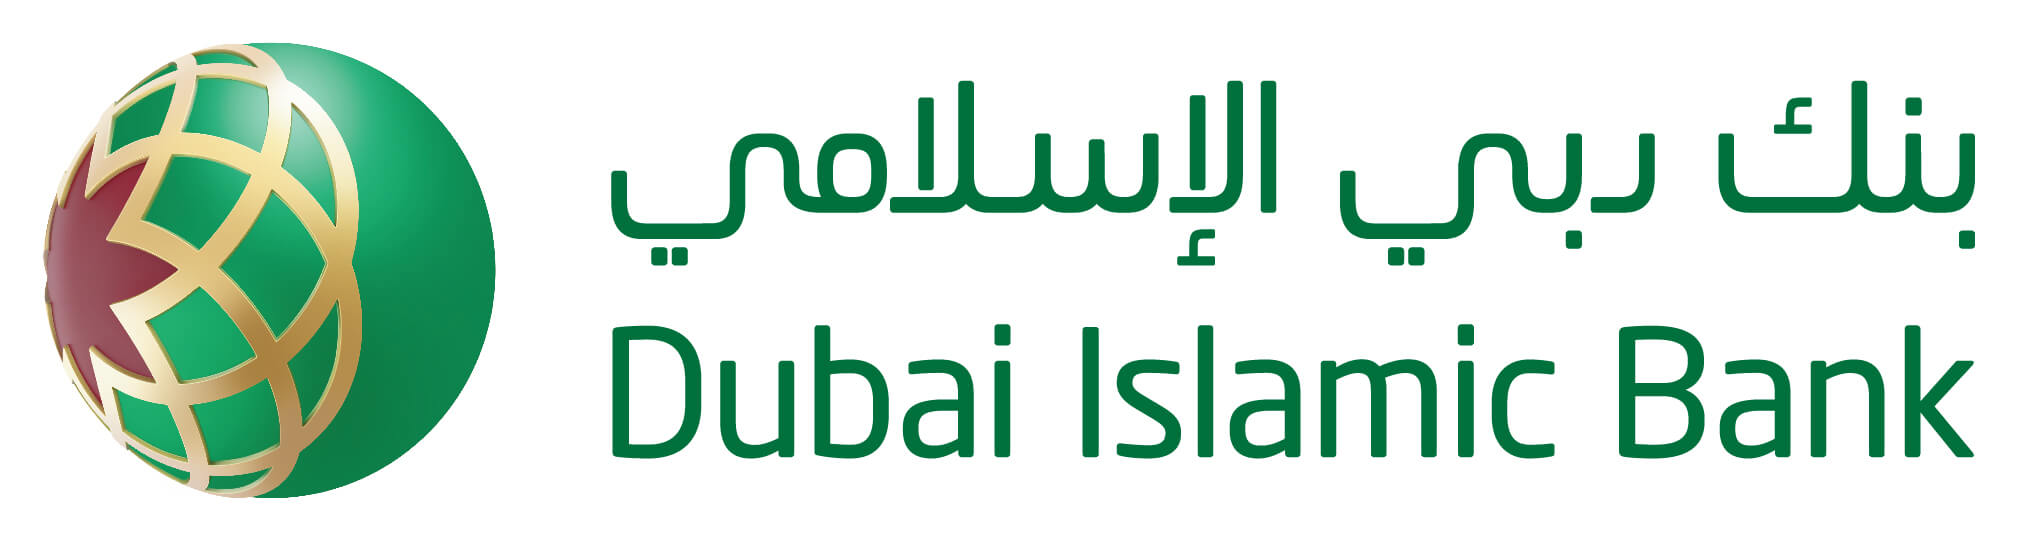 Dubai Islamic Bank Auto Refinance